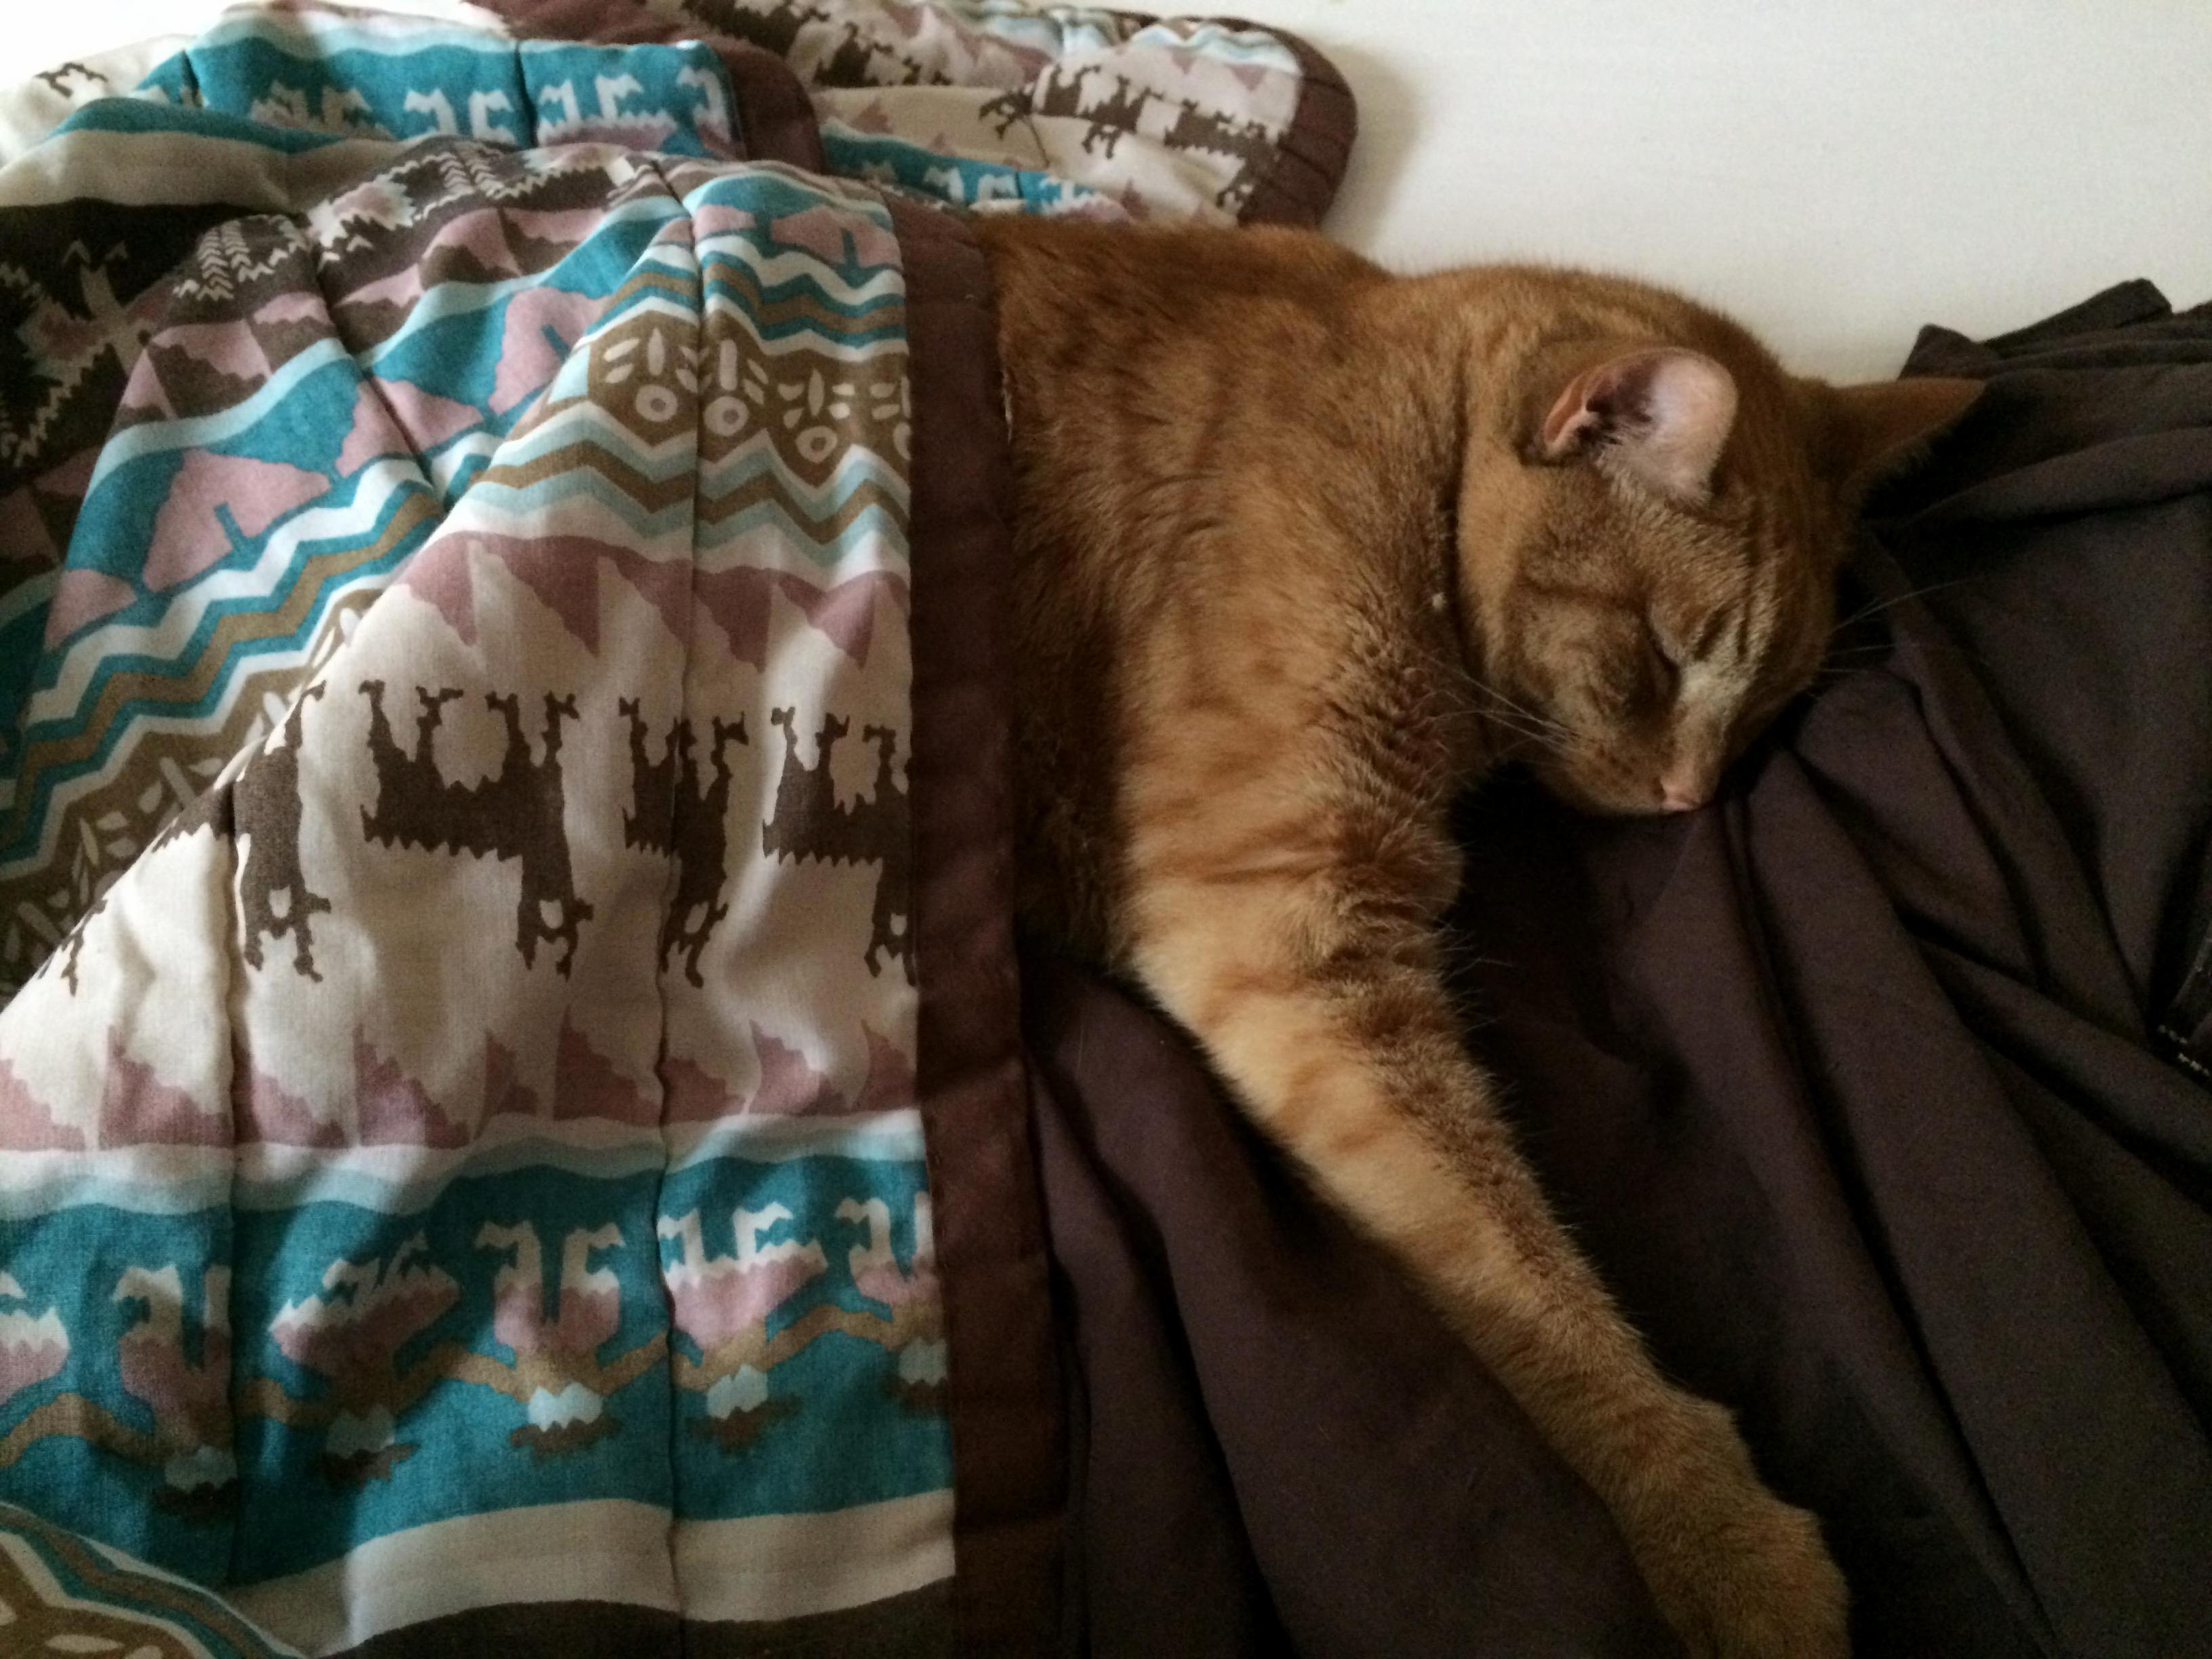 Joe age 14 loves sleeping under blankets